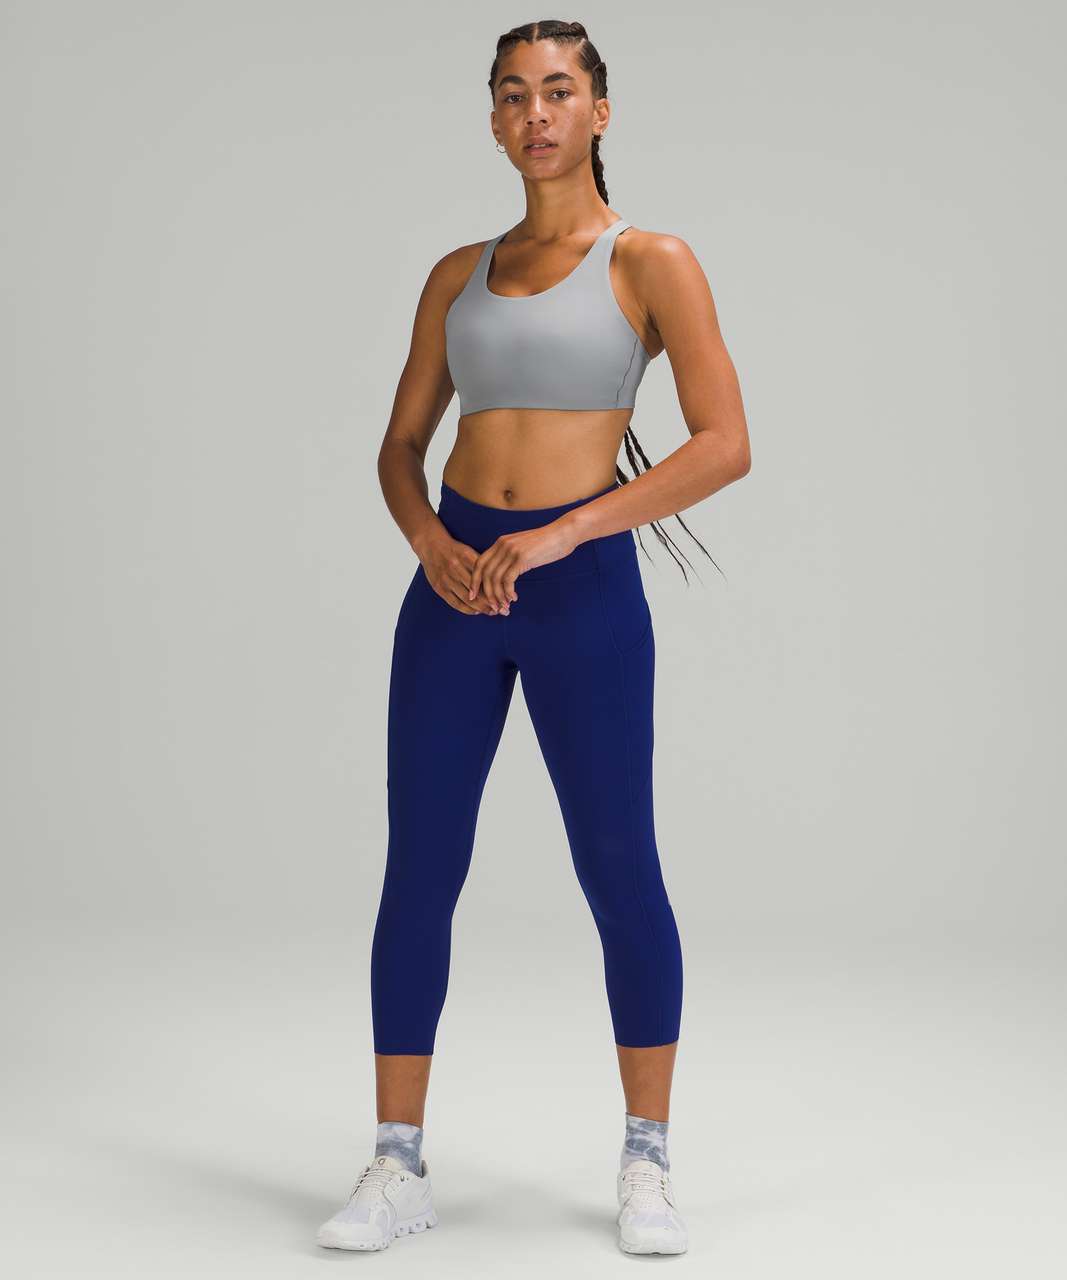 Lululemon Mesh Racerback Yoga Fitness Gym snap front Sports Bra